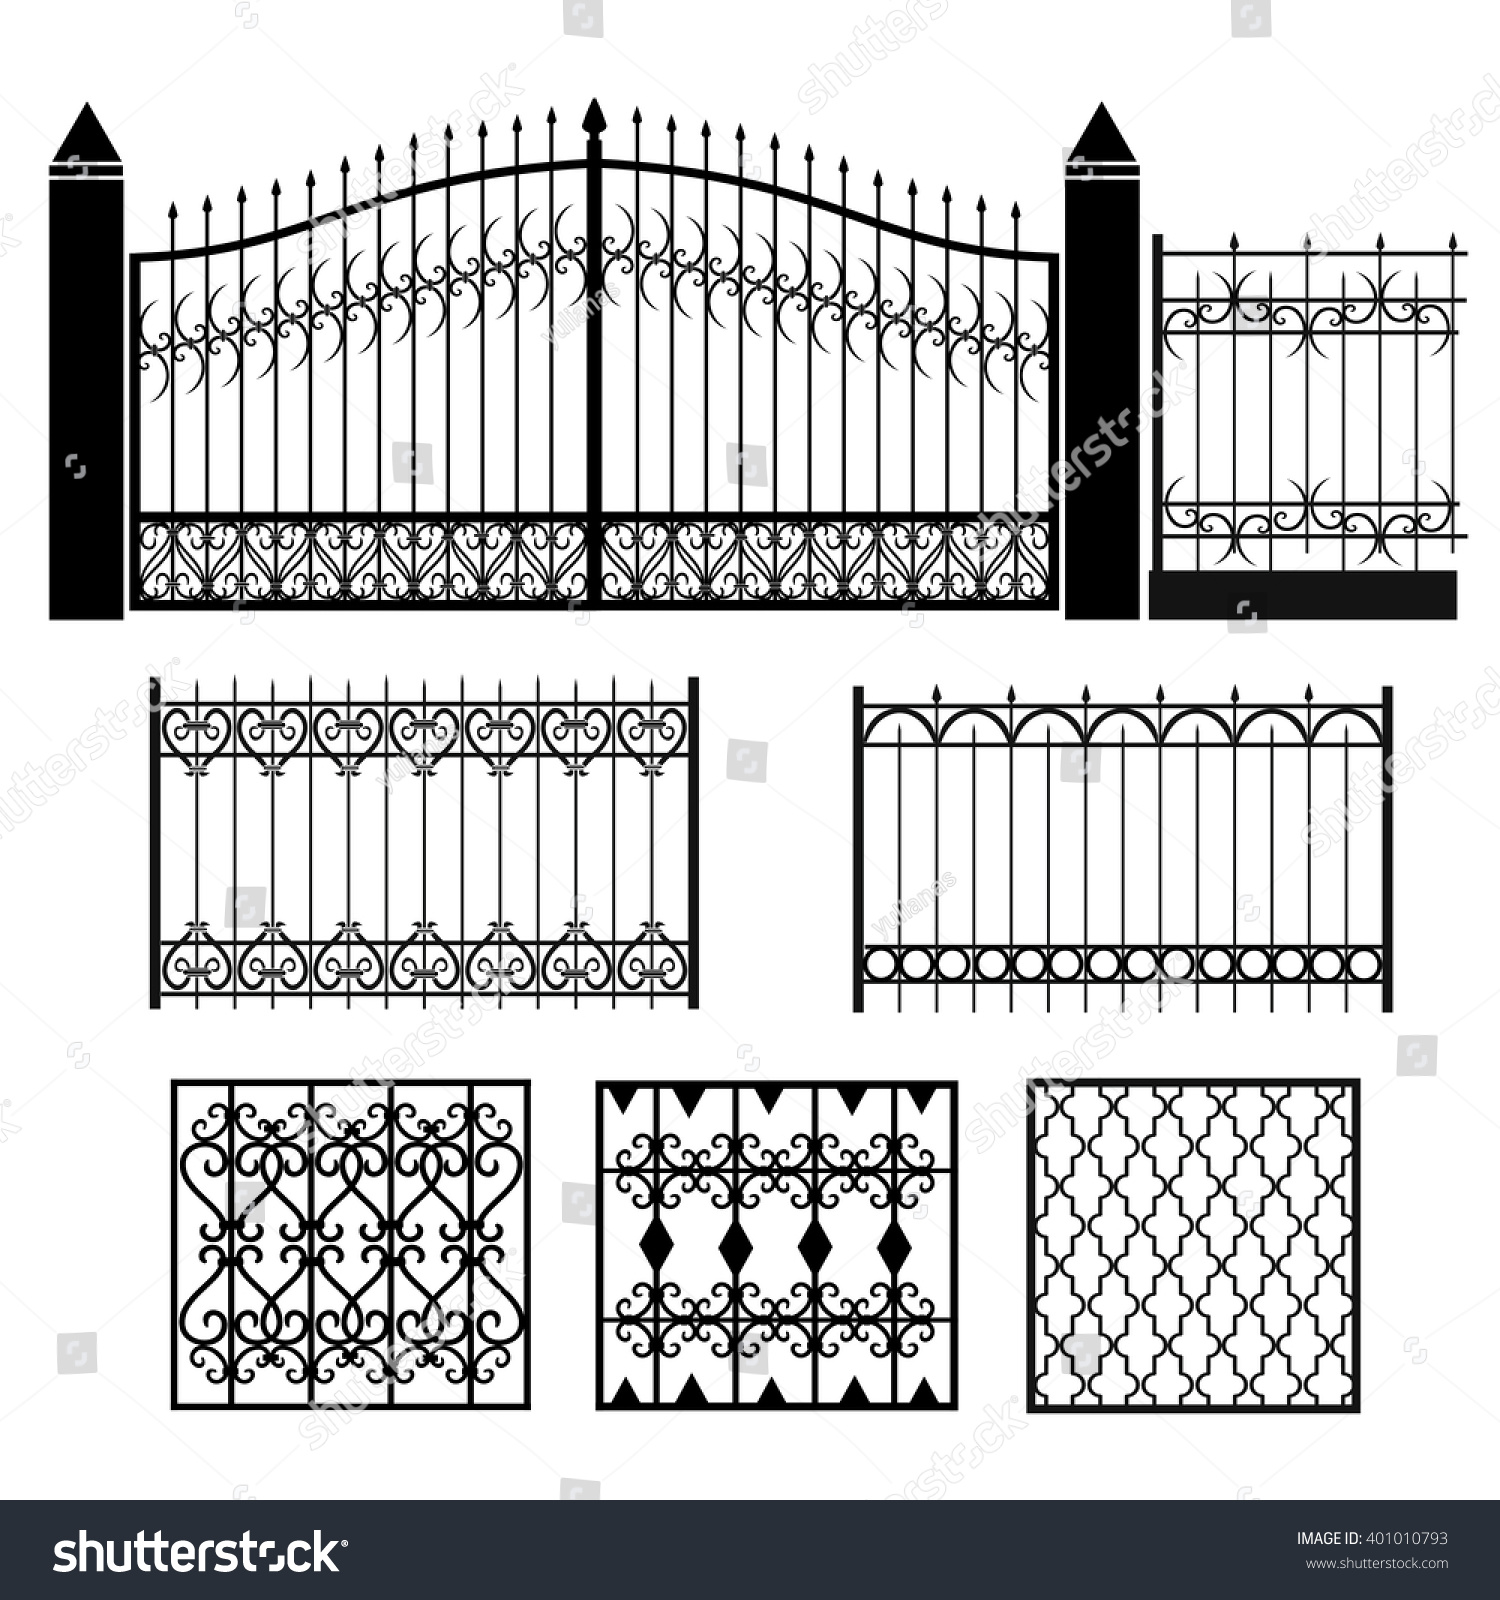 Clip art wrought iron gates